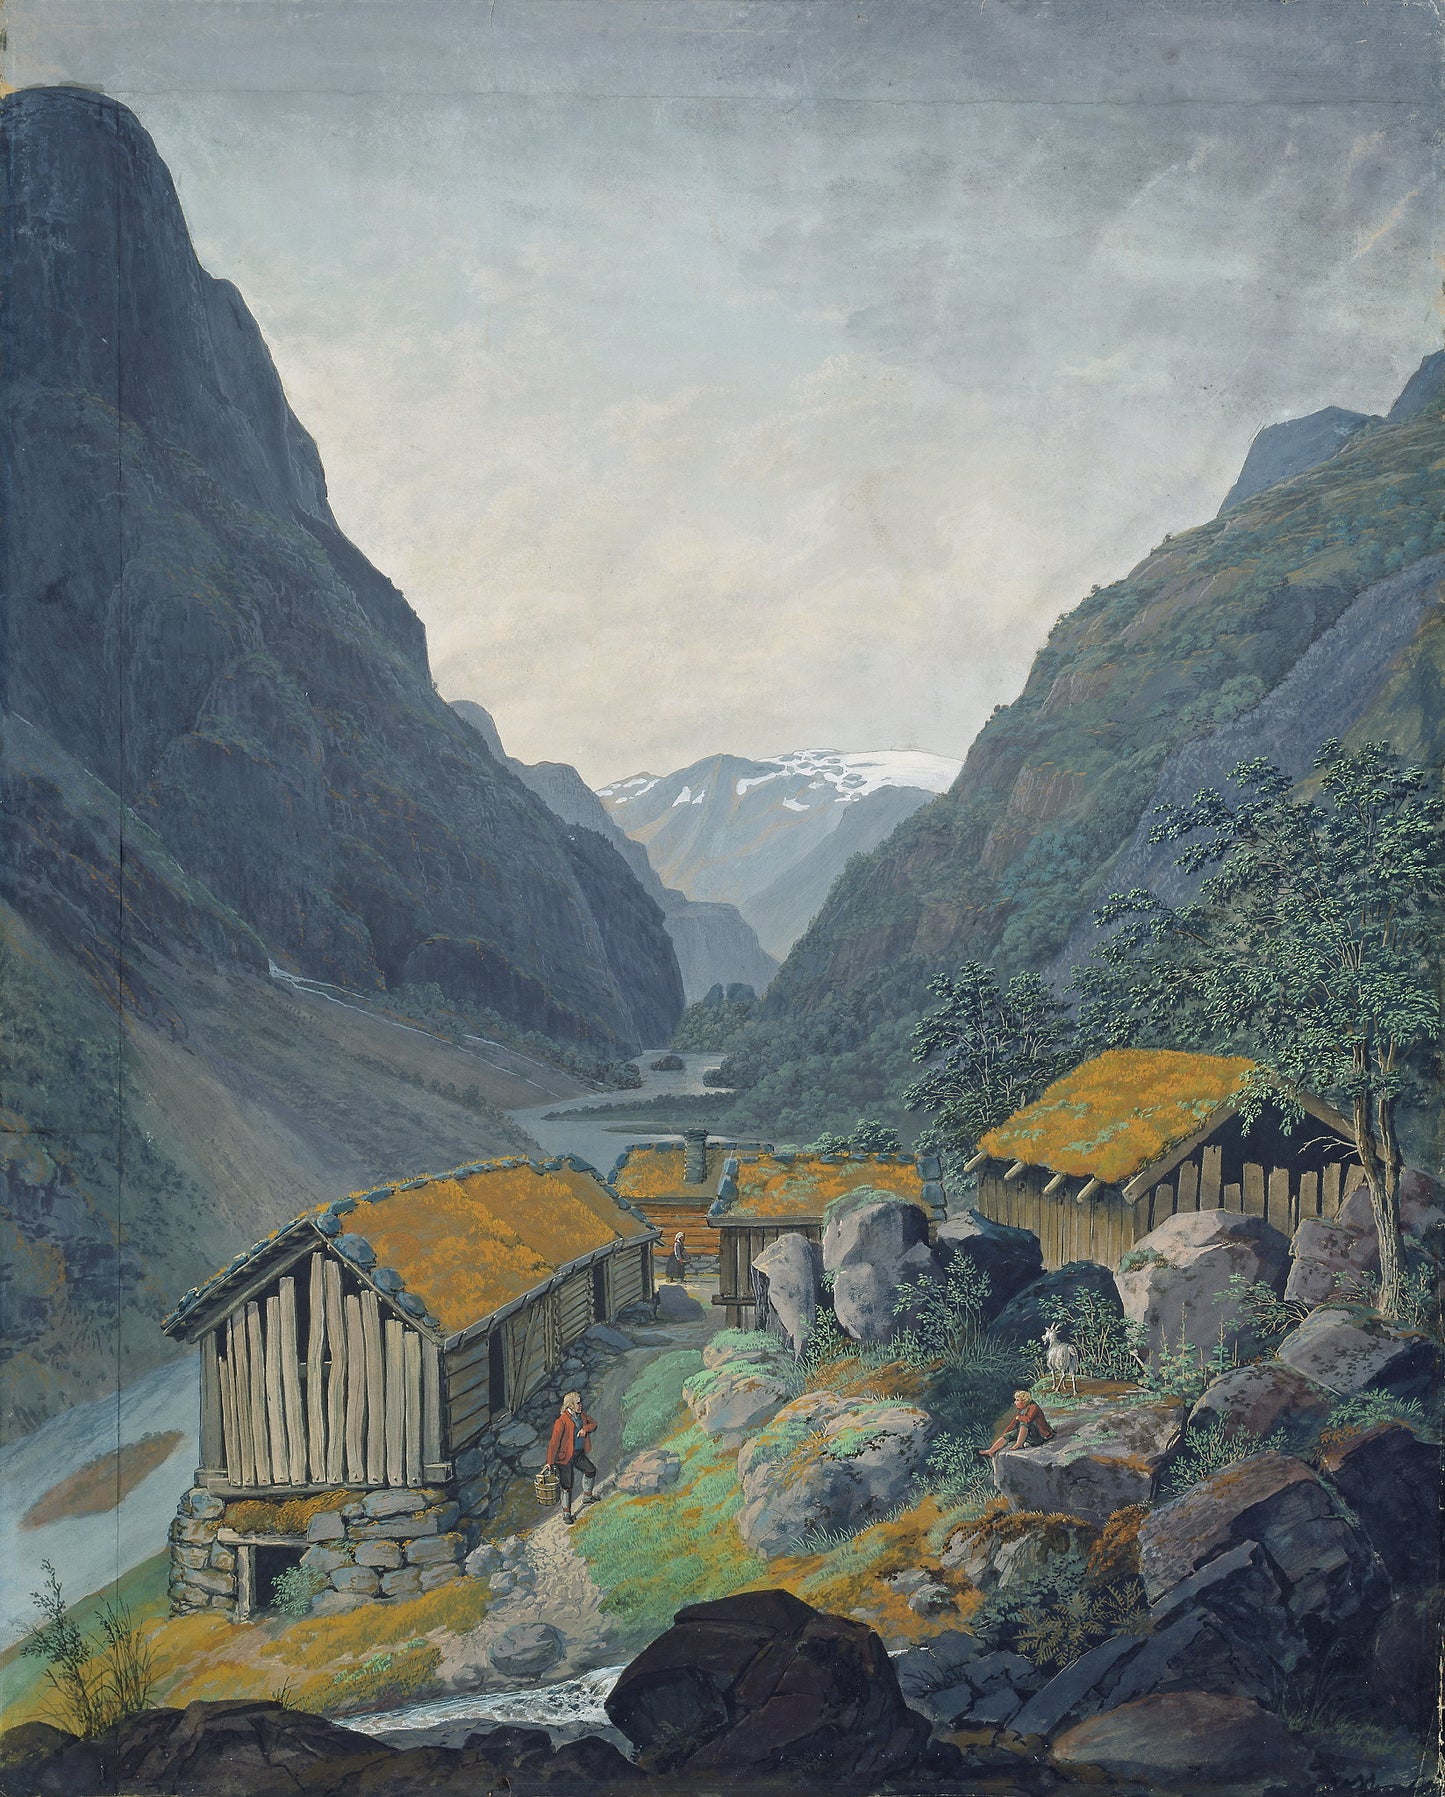 Hjølmodalen in Eidfjord